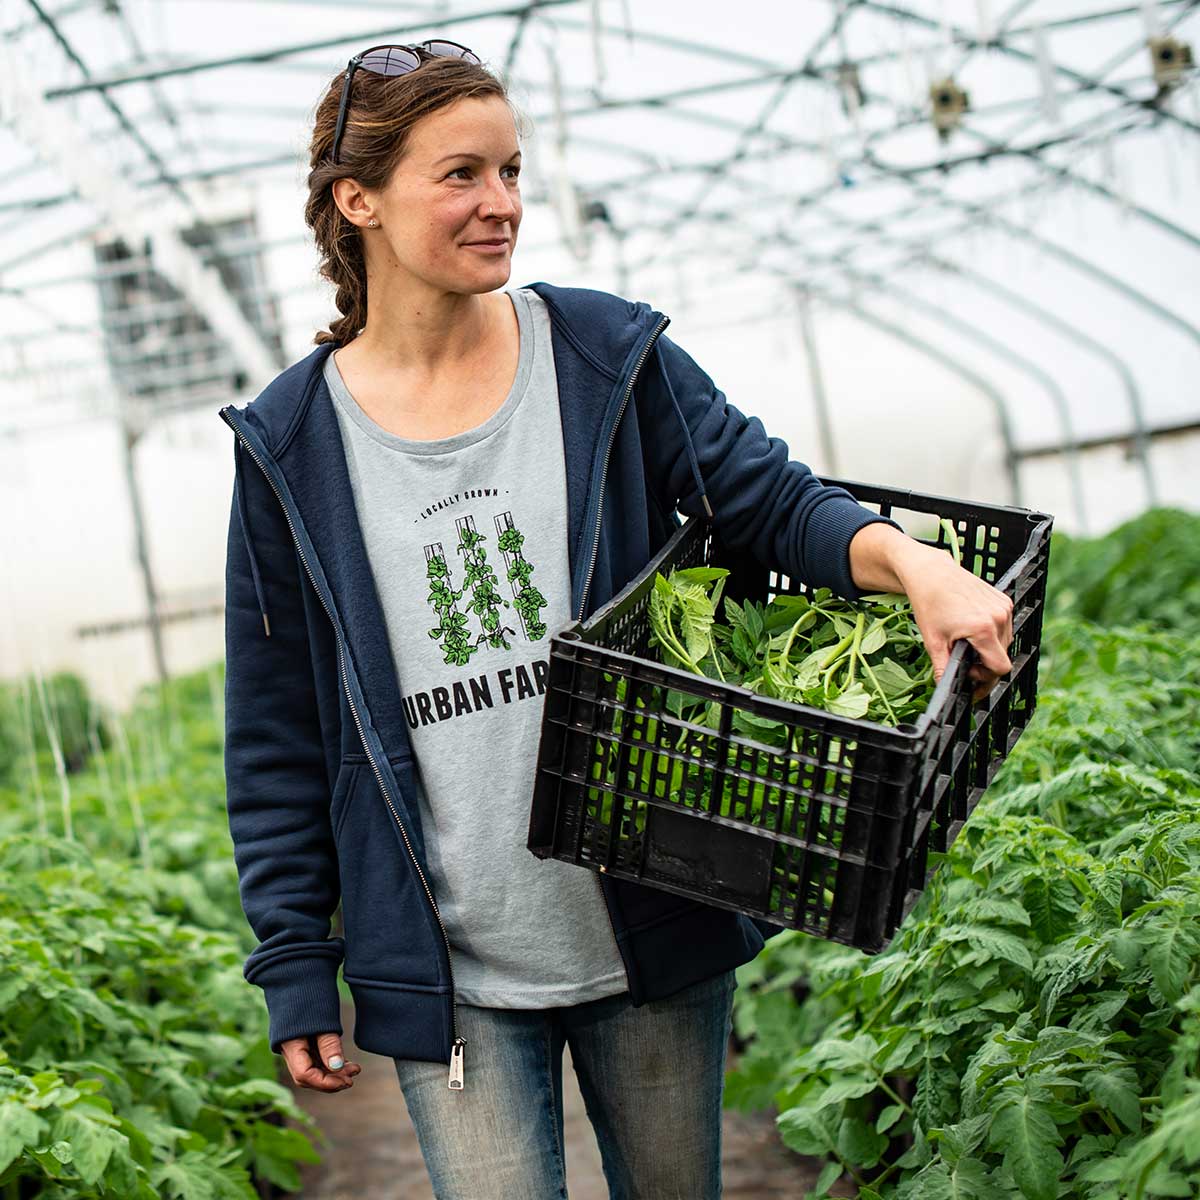 Locally Grown Women’s Urban Farmer T-Shirt